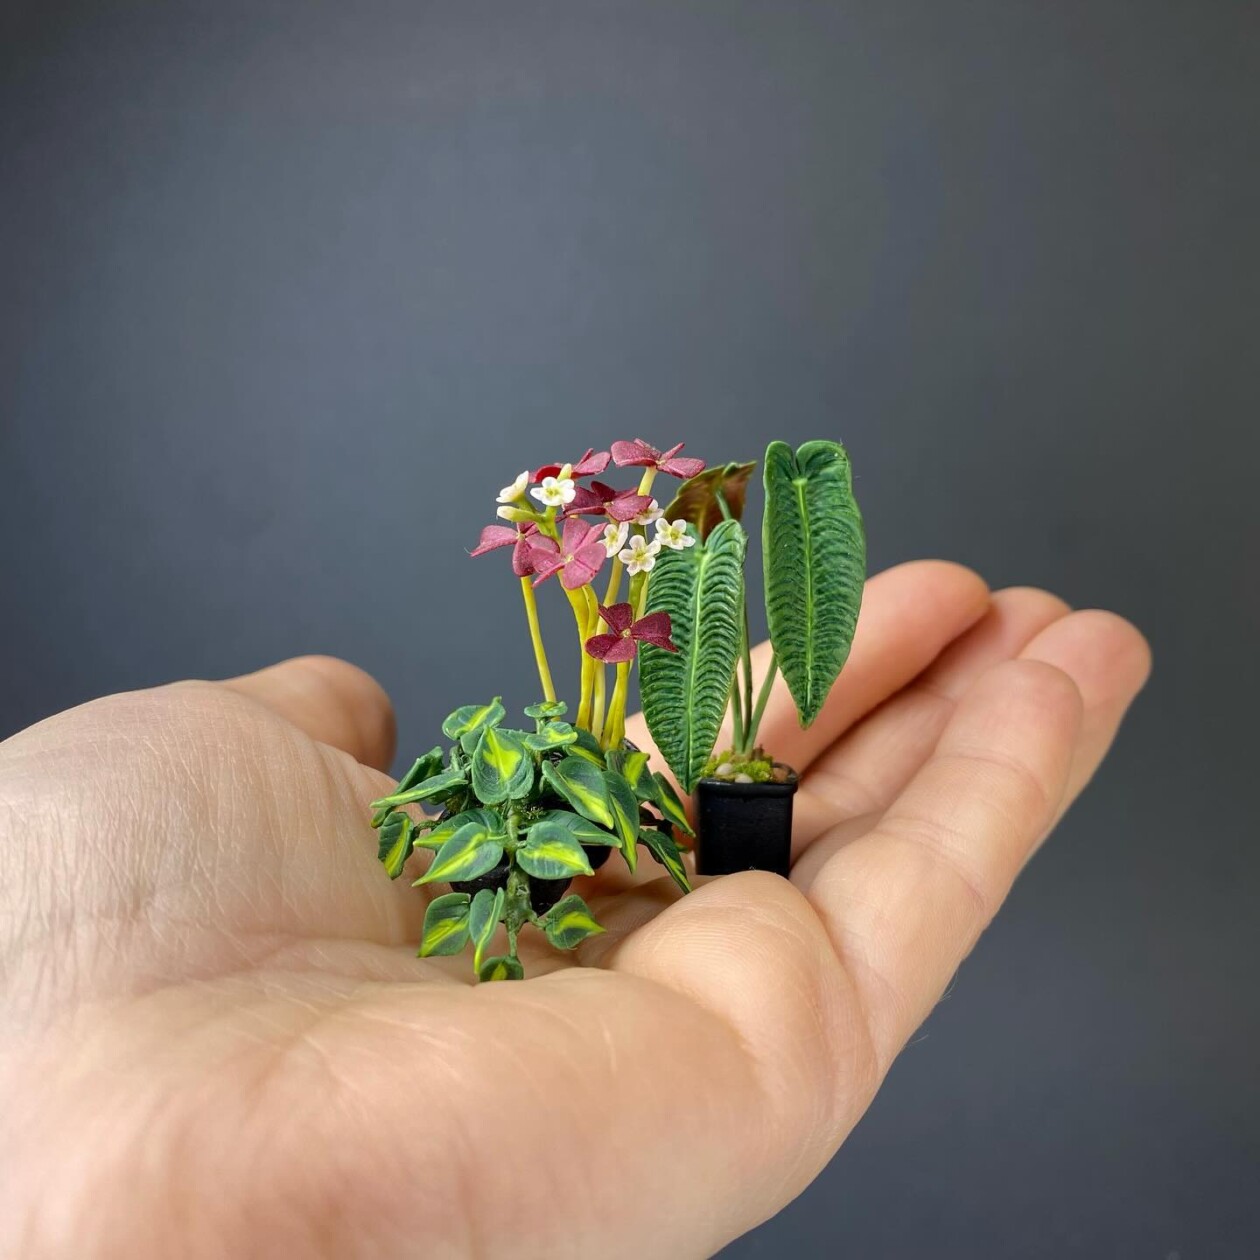 Handmade Miniature Polymer Clay Plants By Astrid Wilk (17)